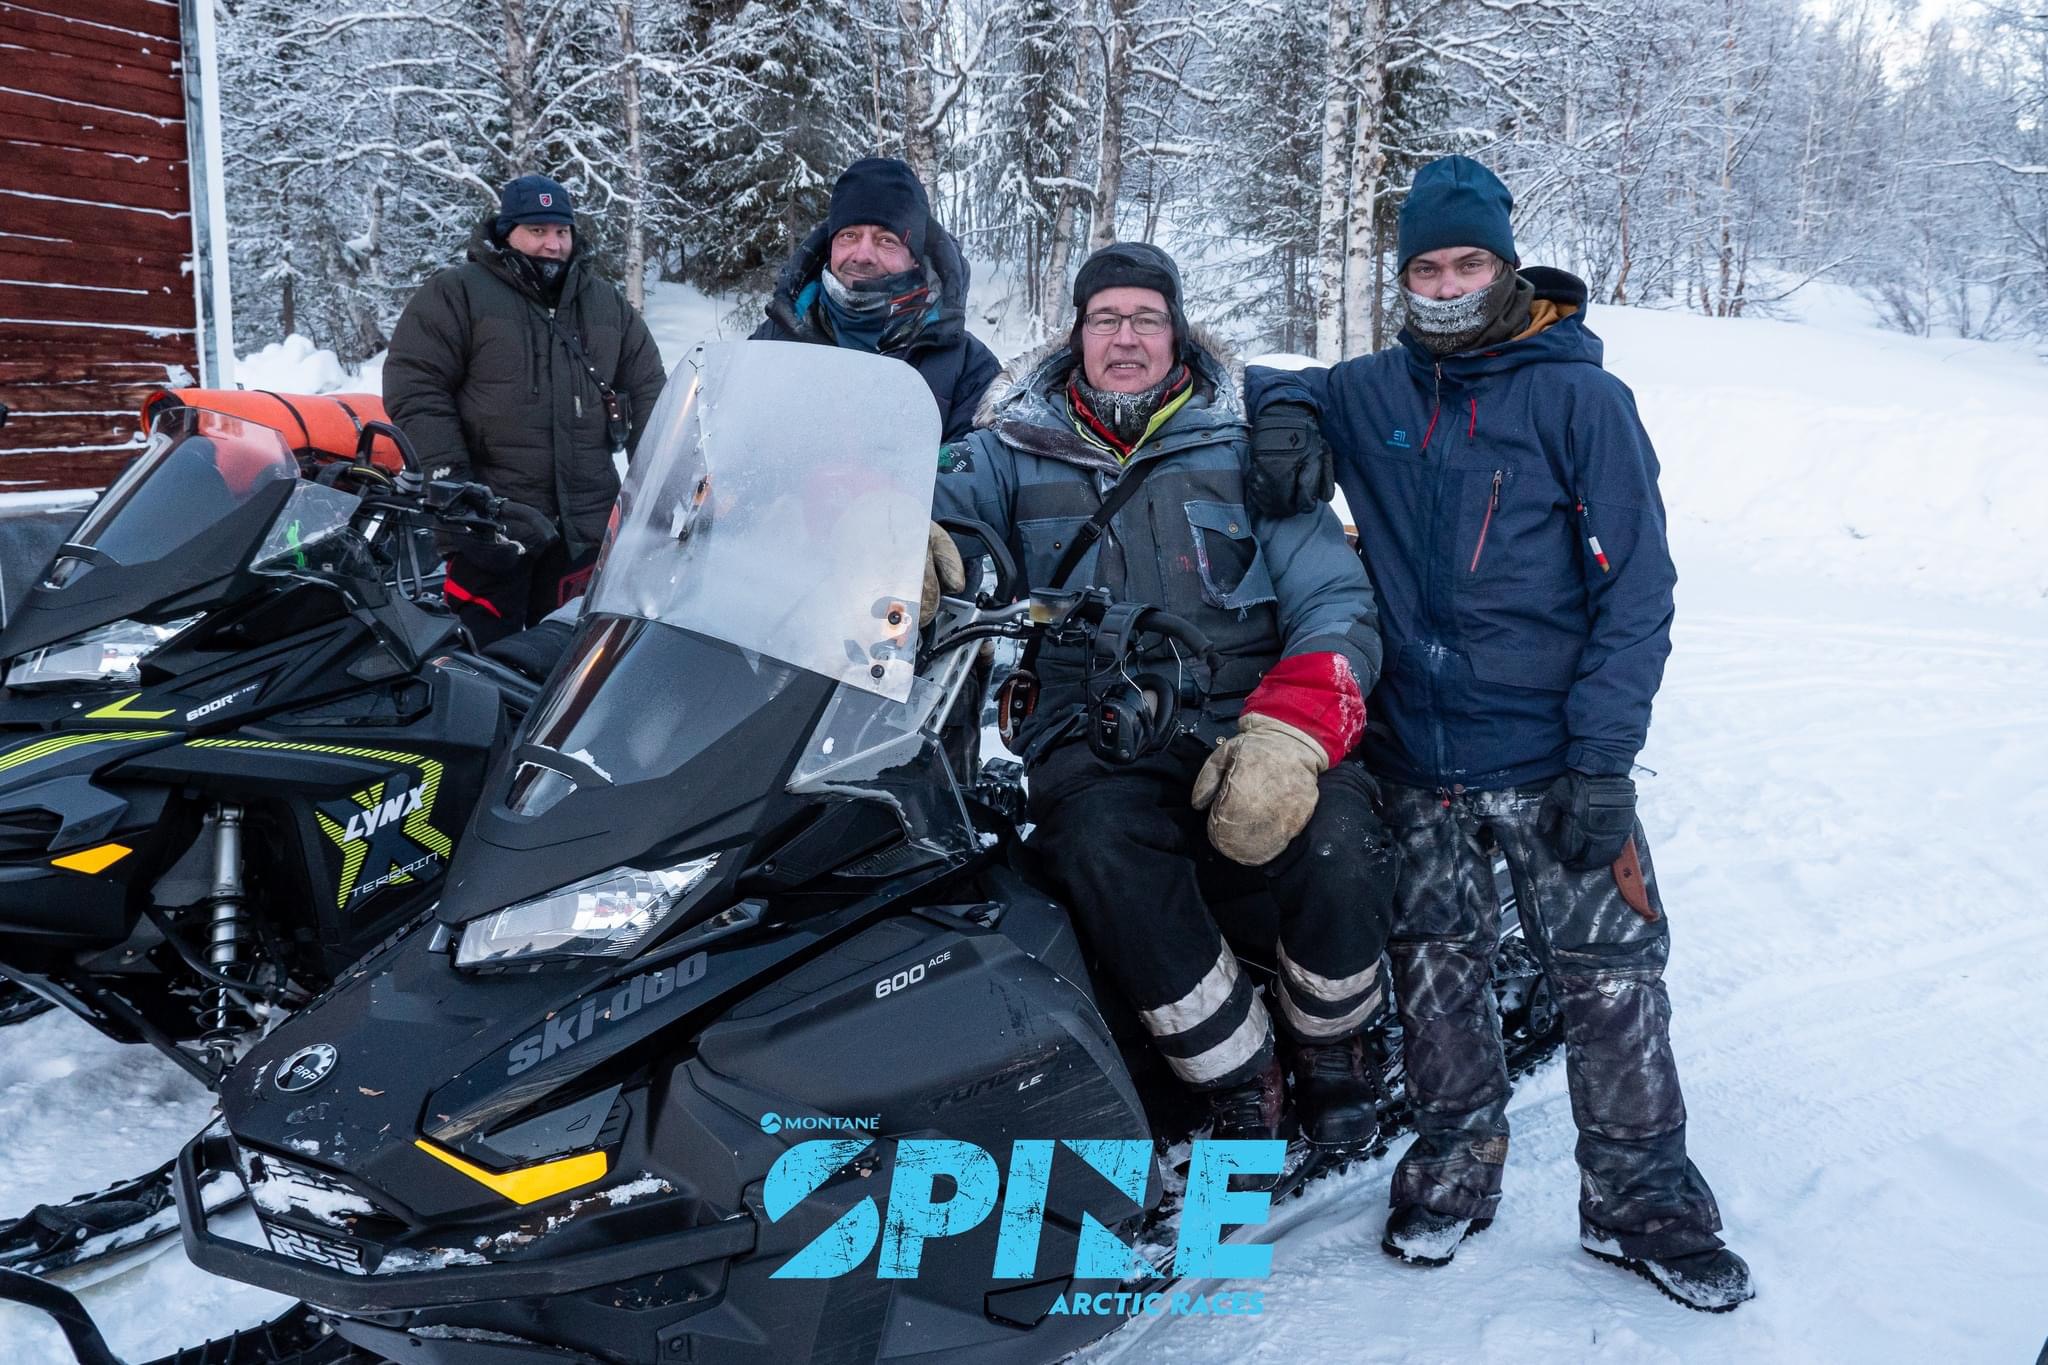 The amazing Sami snowmobile team